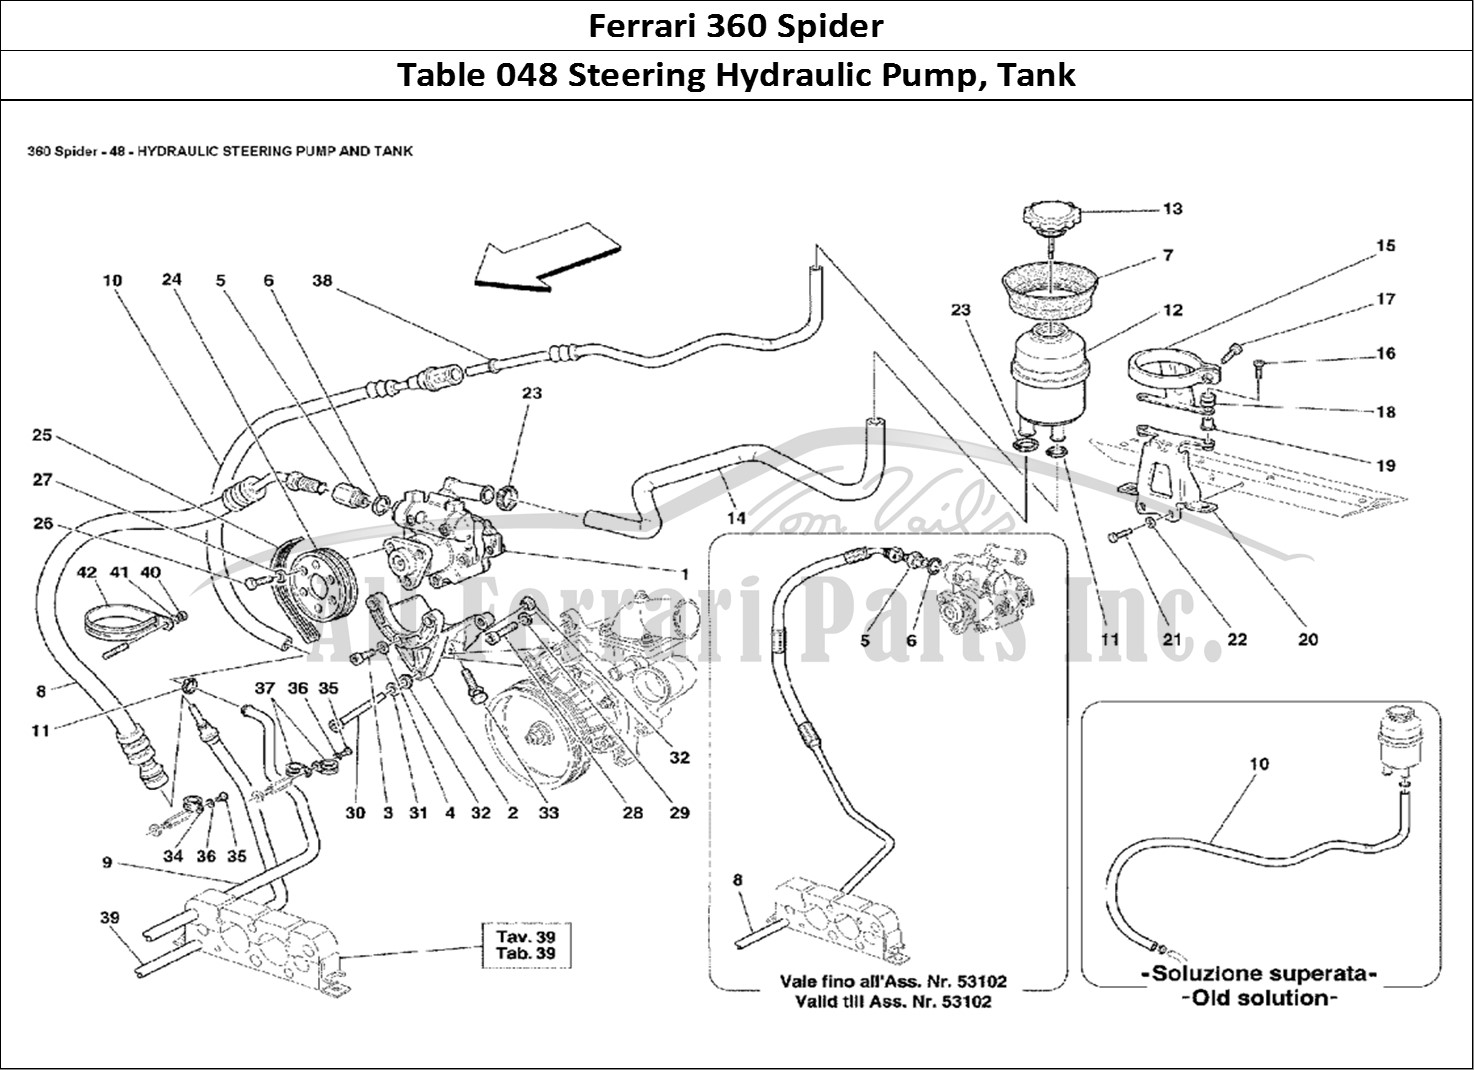 Ferrari Parts Ferrari 360 Spider Page 048 Hydraulic Steering Pump a